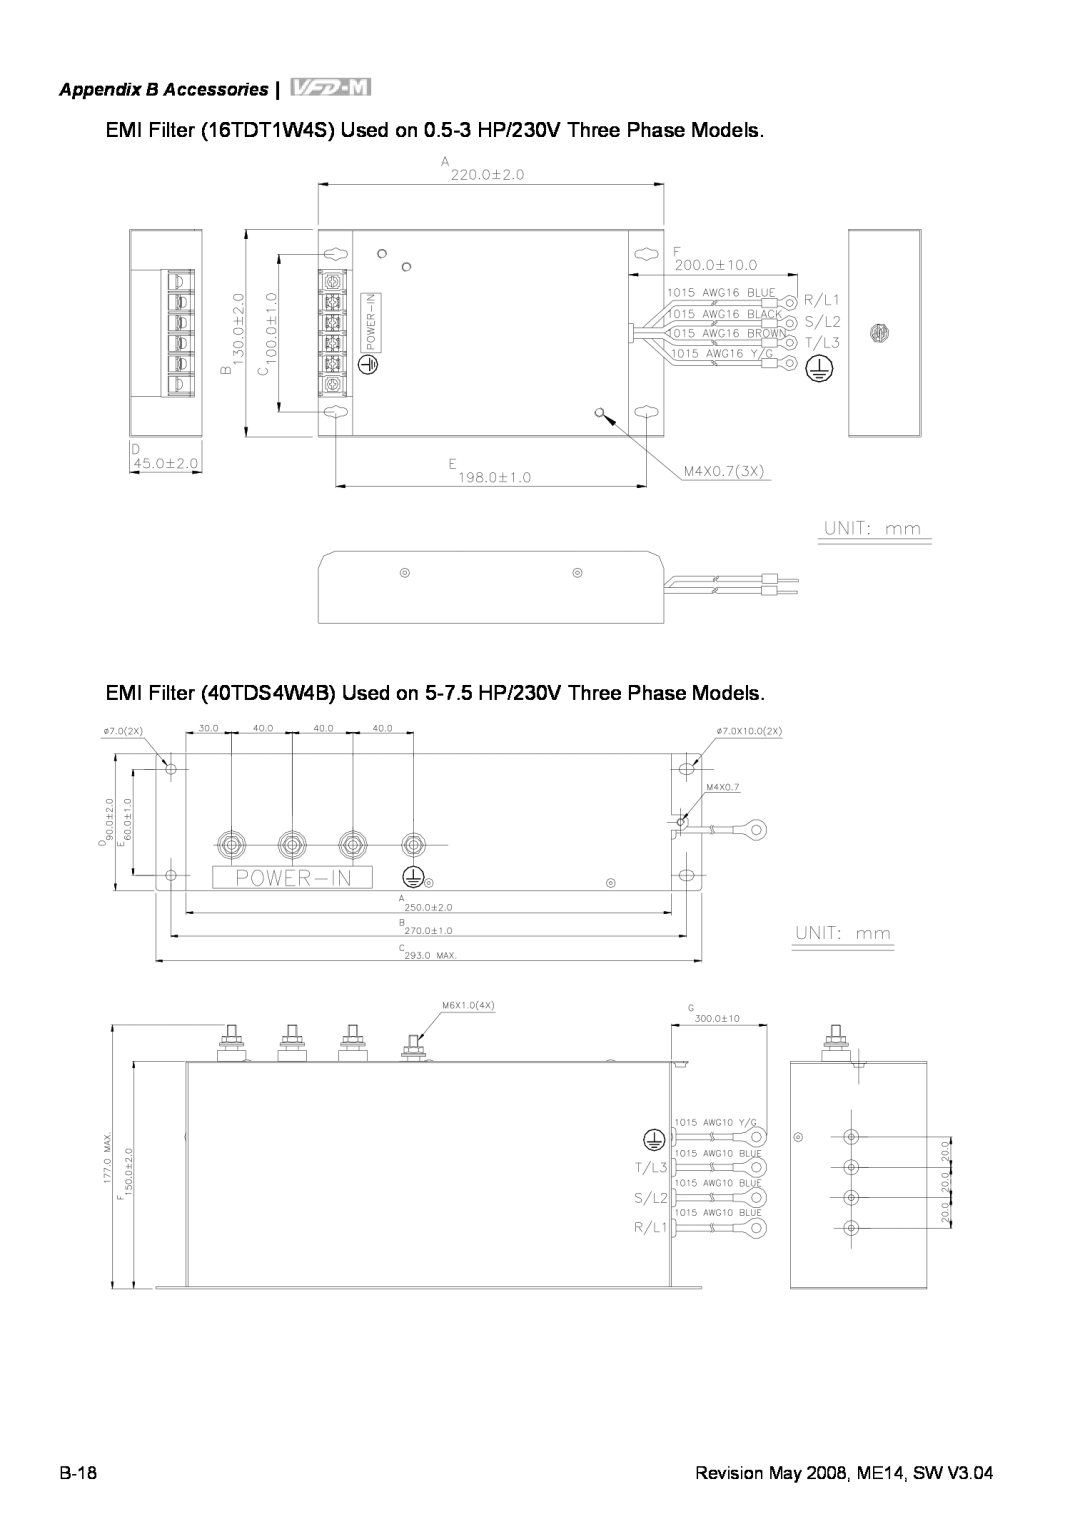 Delta Electronics VFD-M manual EMI Filter 16TDT1W4S Used on 0.5-3 HP/230V Three Phase Models, Appendix B Accessories, B-18 